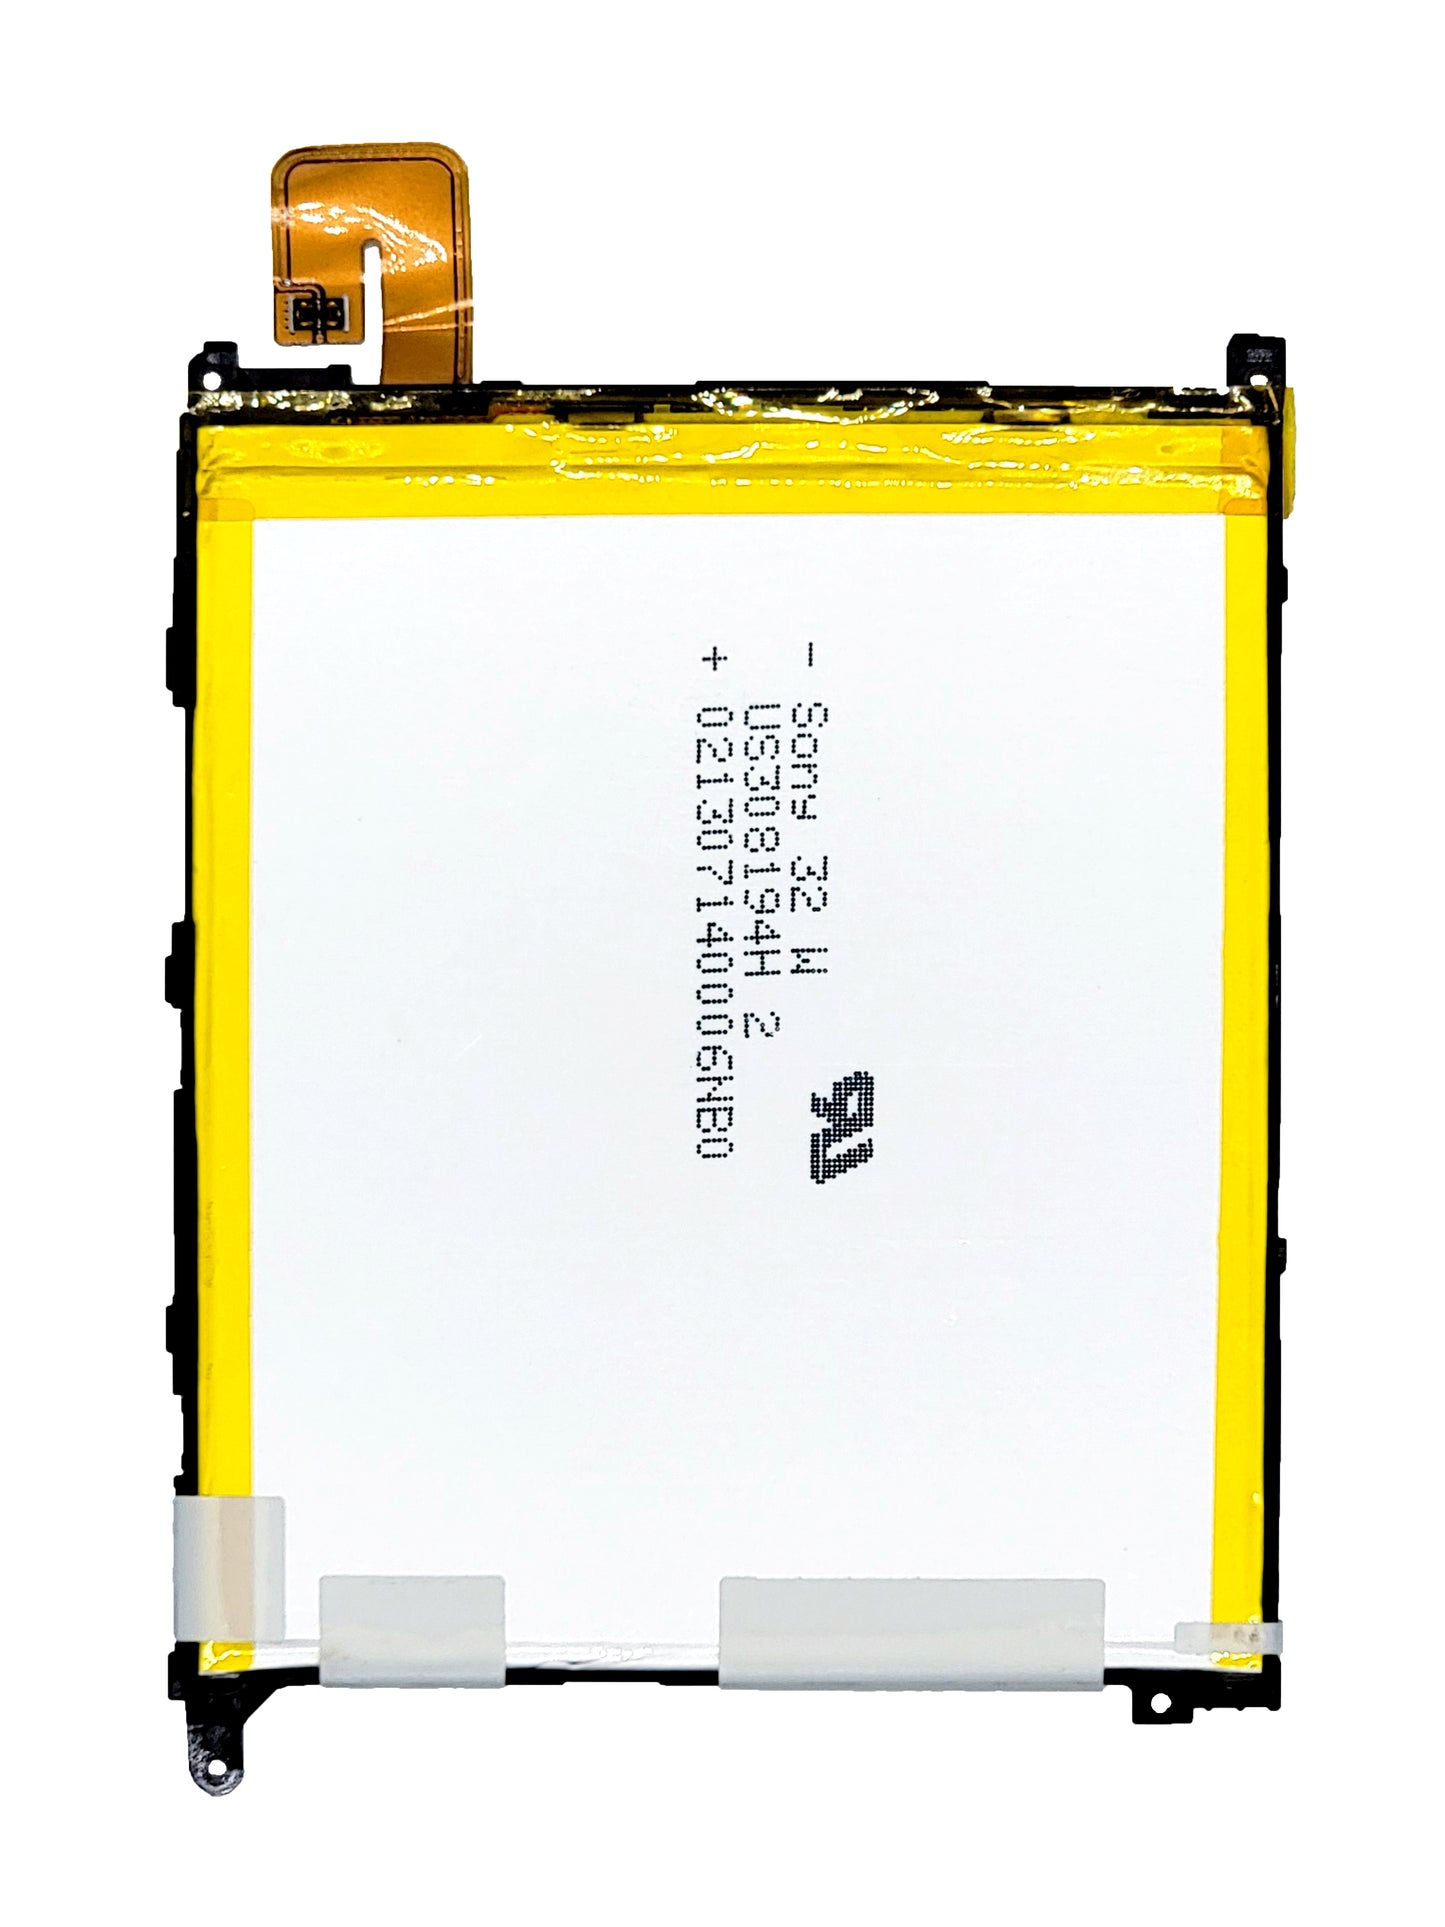 SXZ Xperia Z Ultra Battery (Premium)